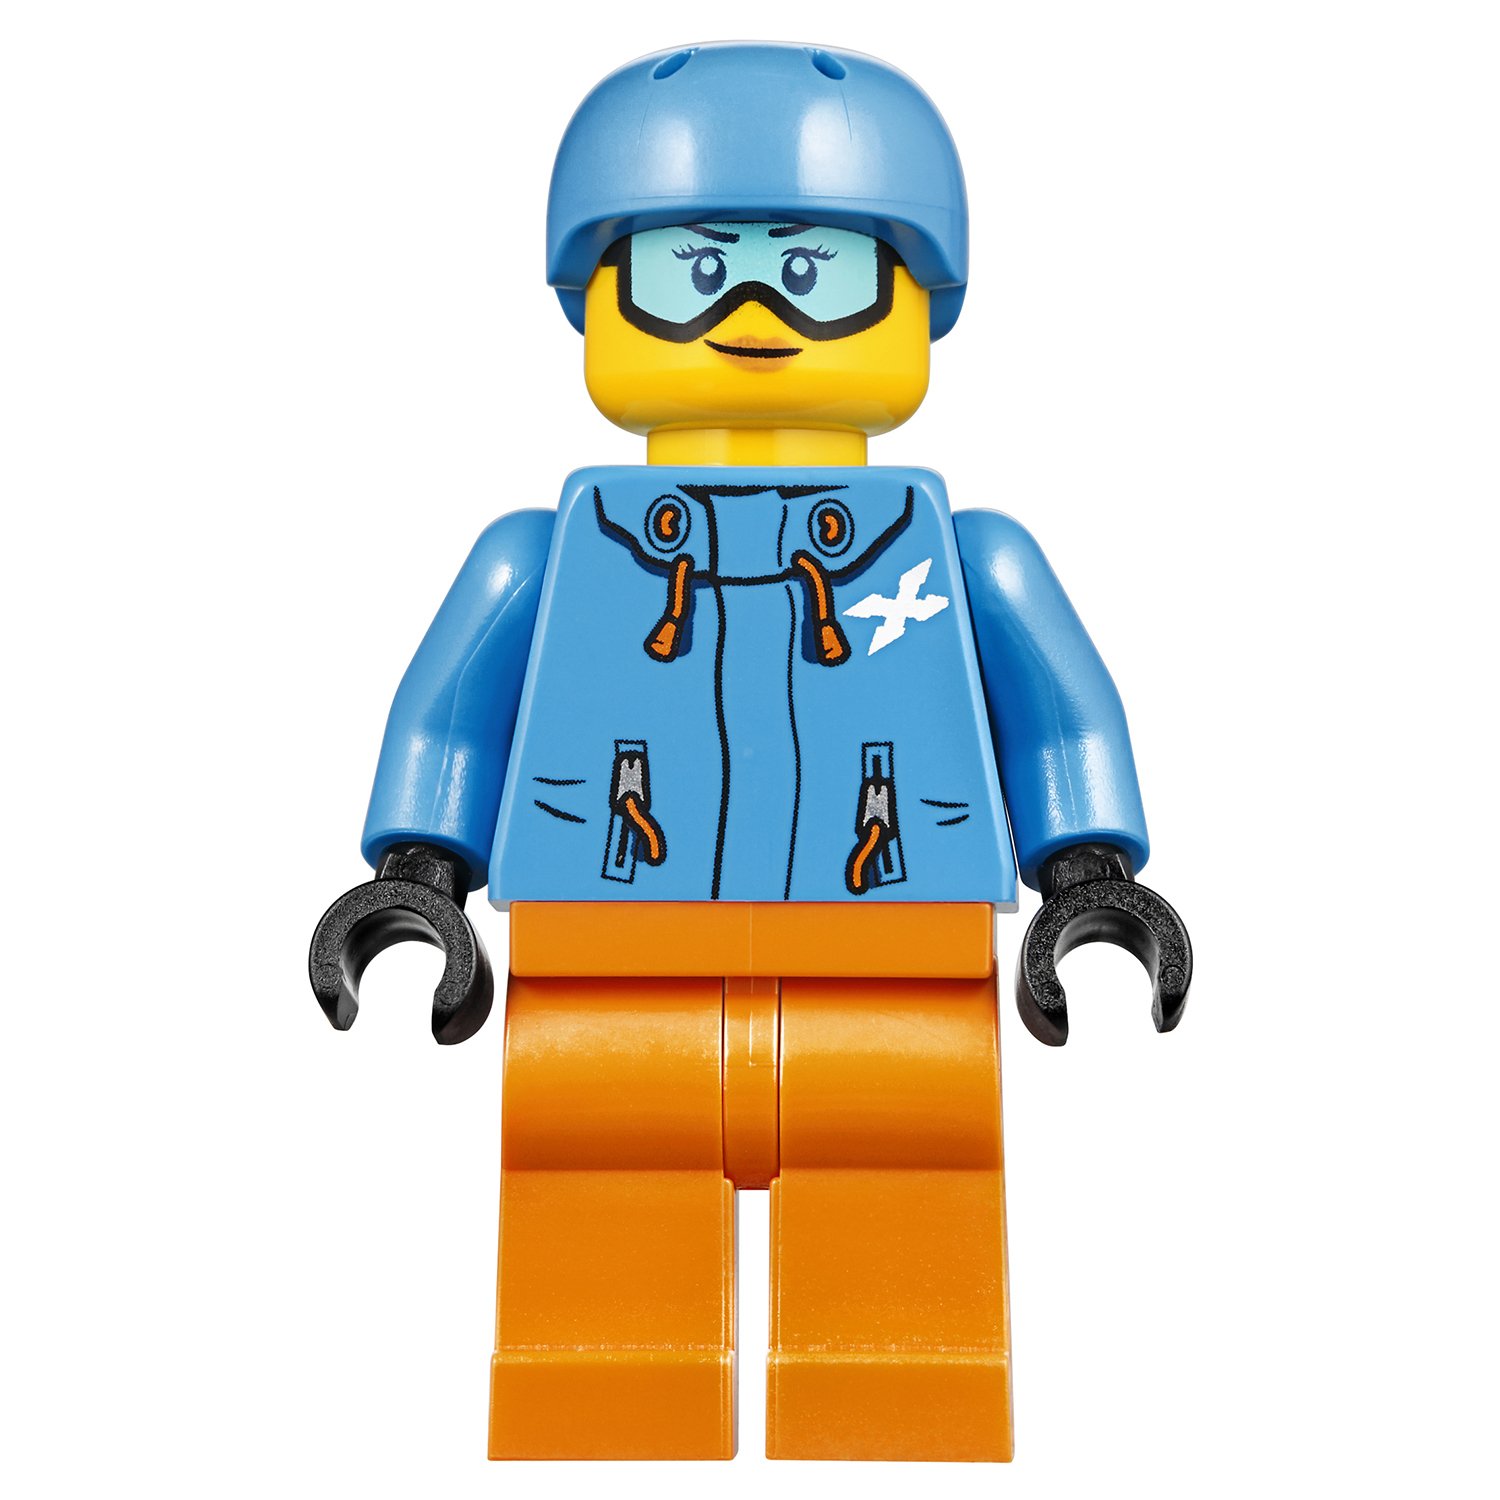 Конструктор Lego® City Great Vehicles - Снегоуборочная машина  